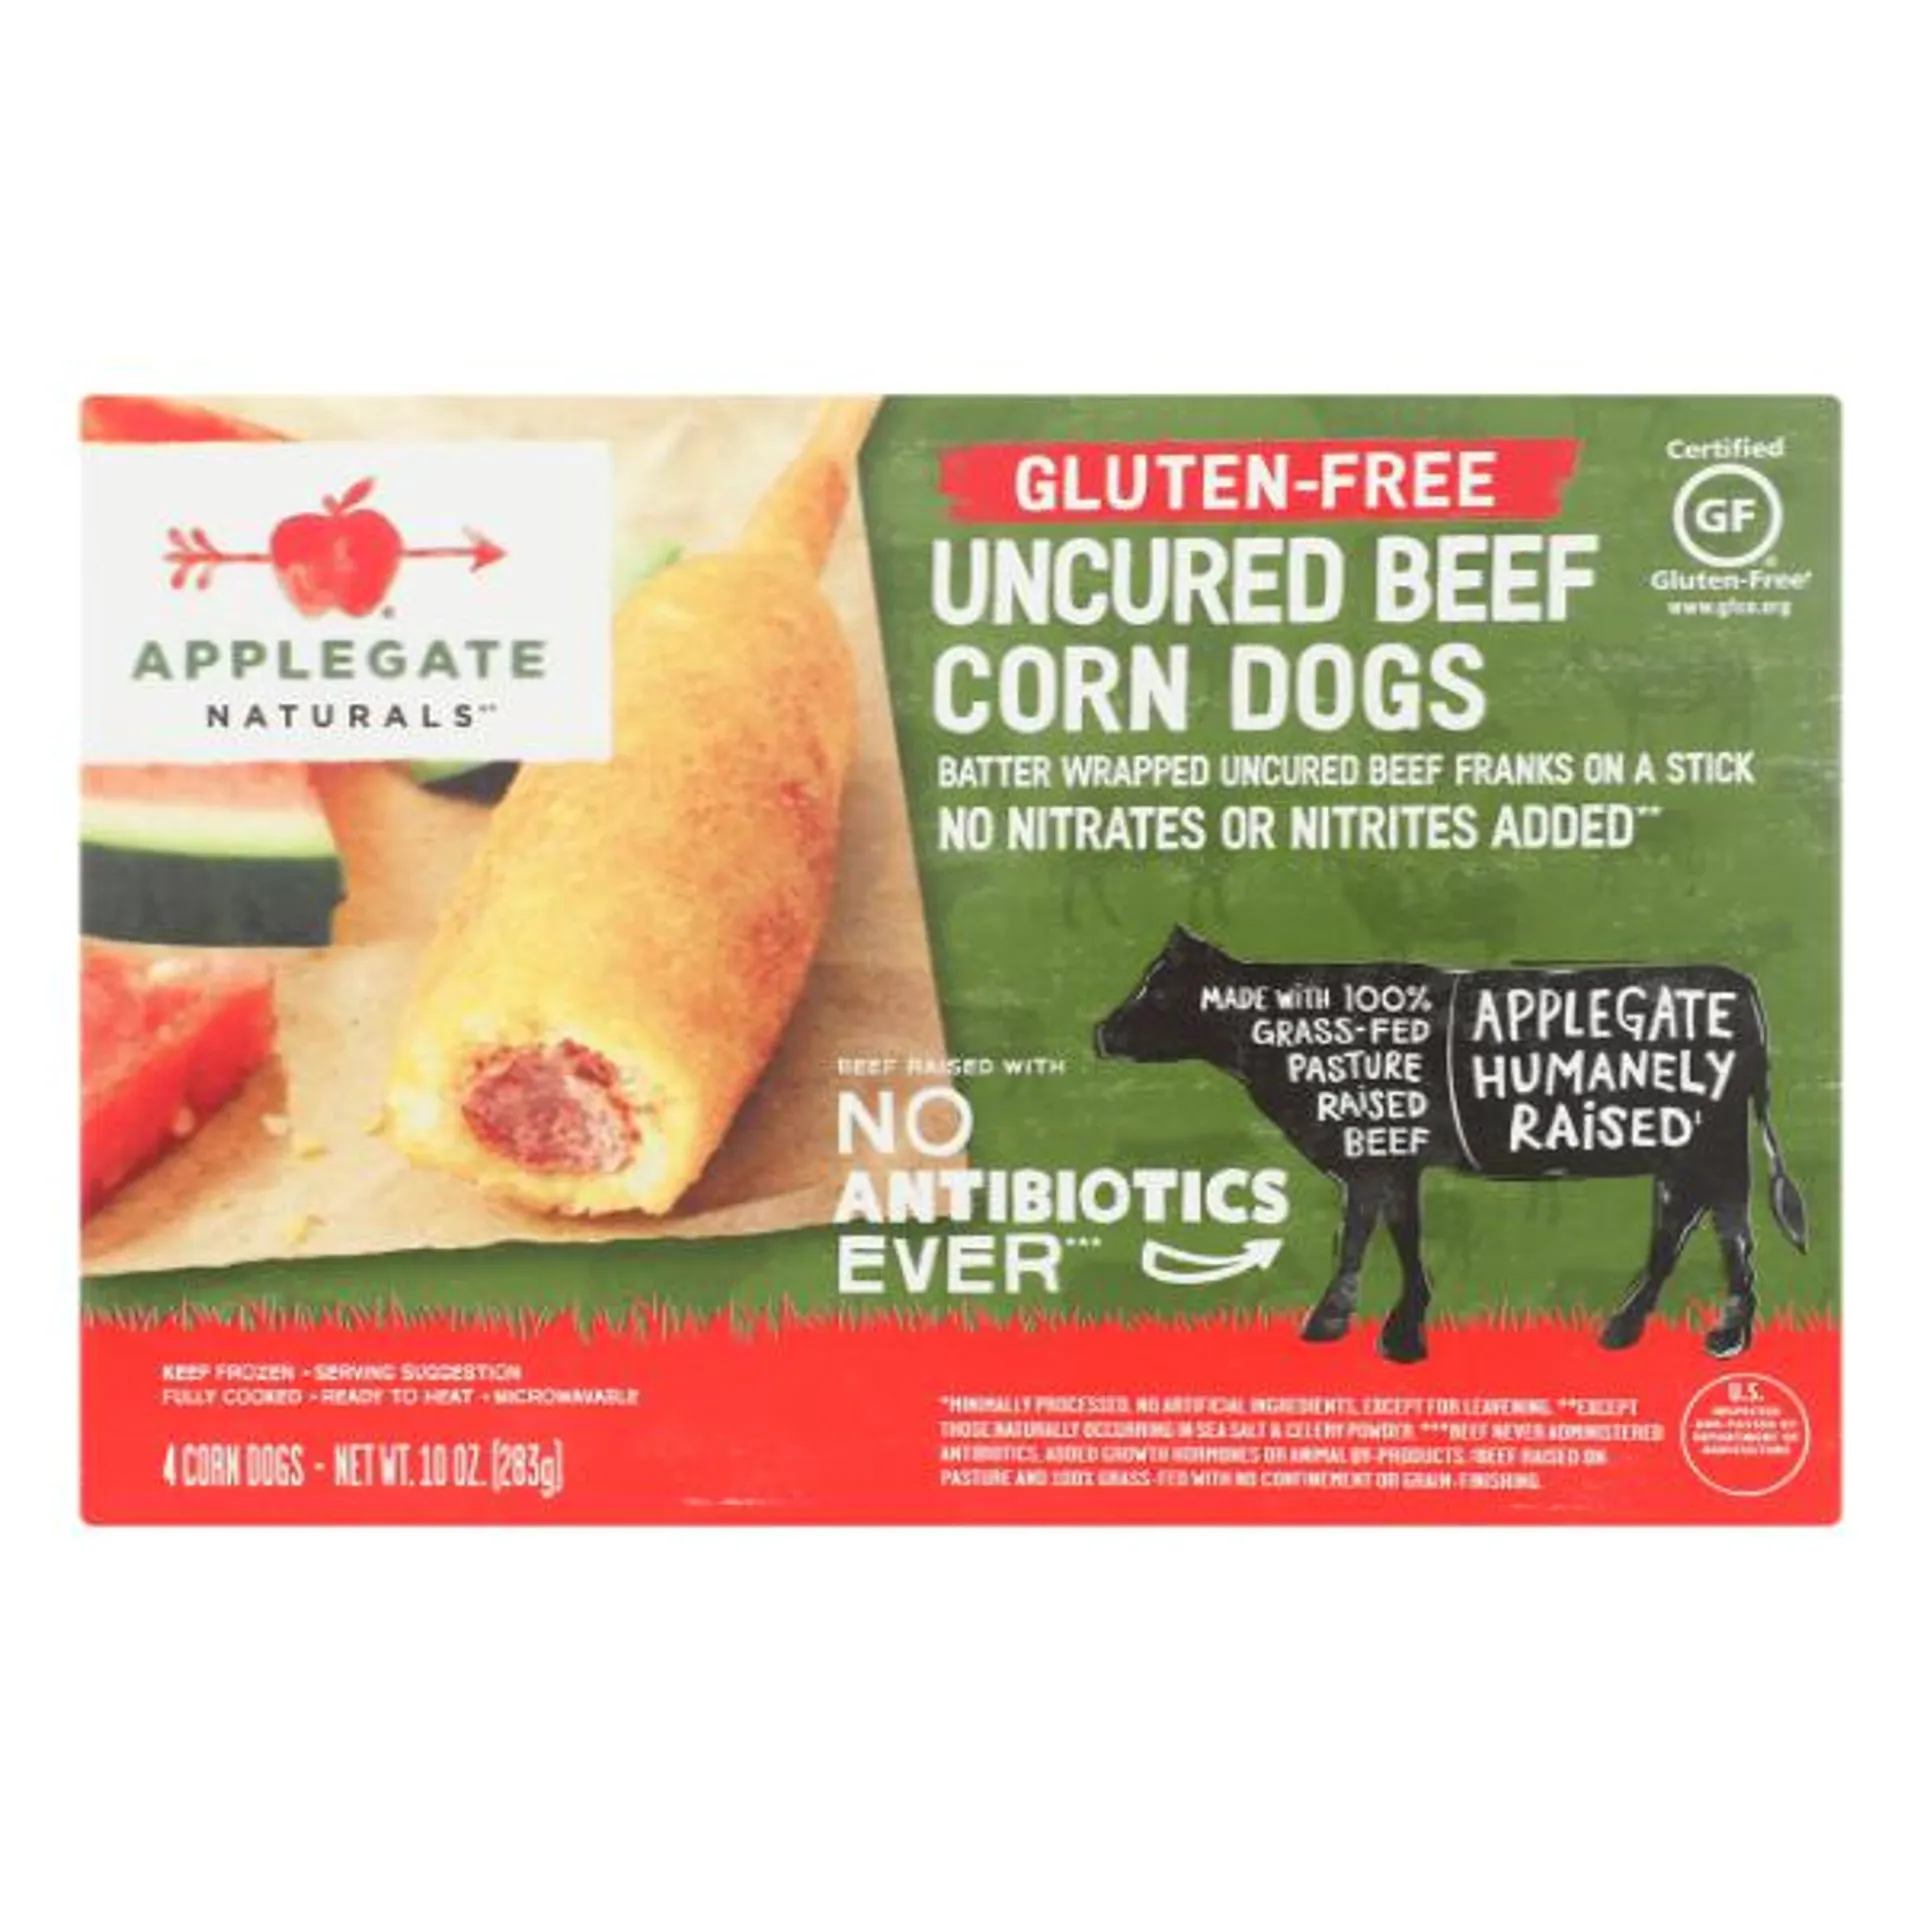 Applegate Naturals Gluten Free Uncured Beef Corn Dogs - 10 Ounce